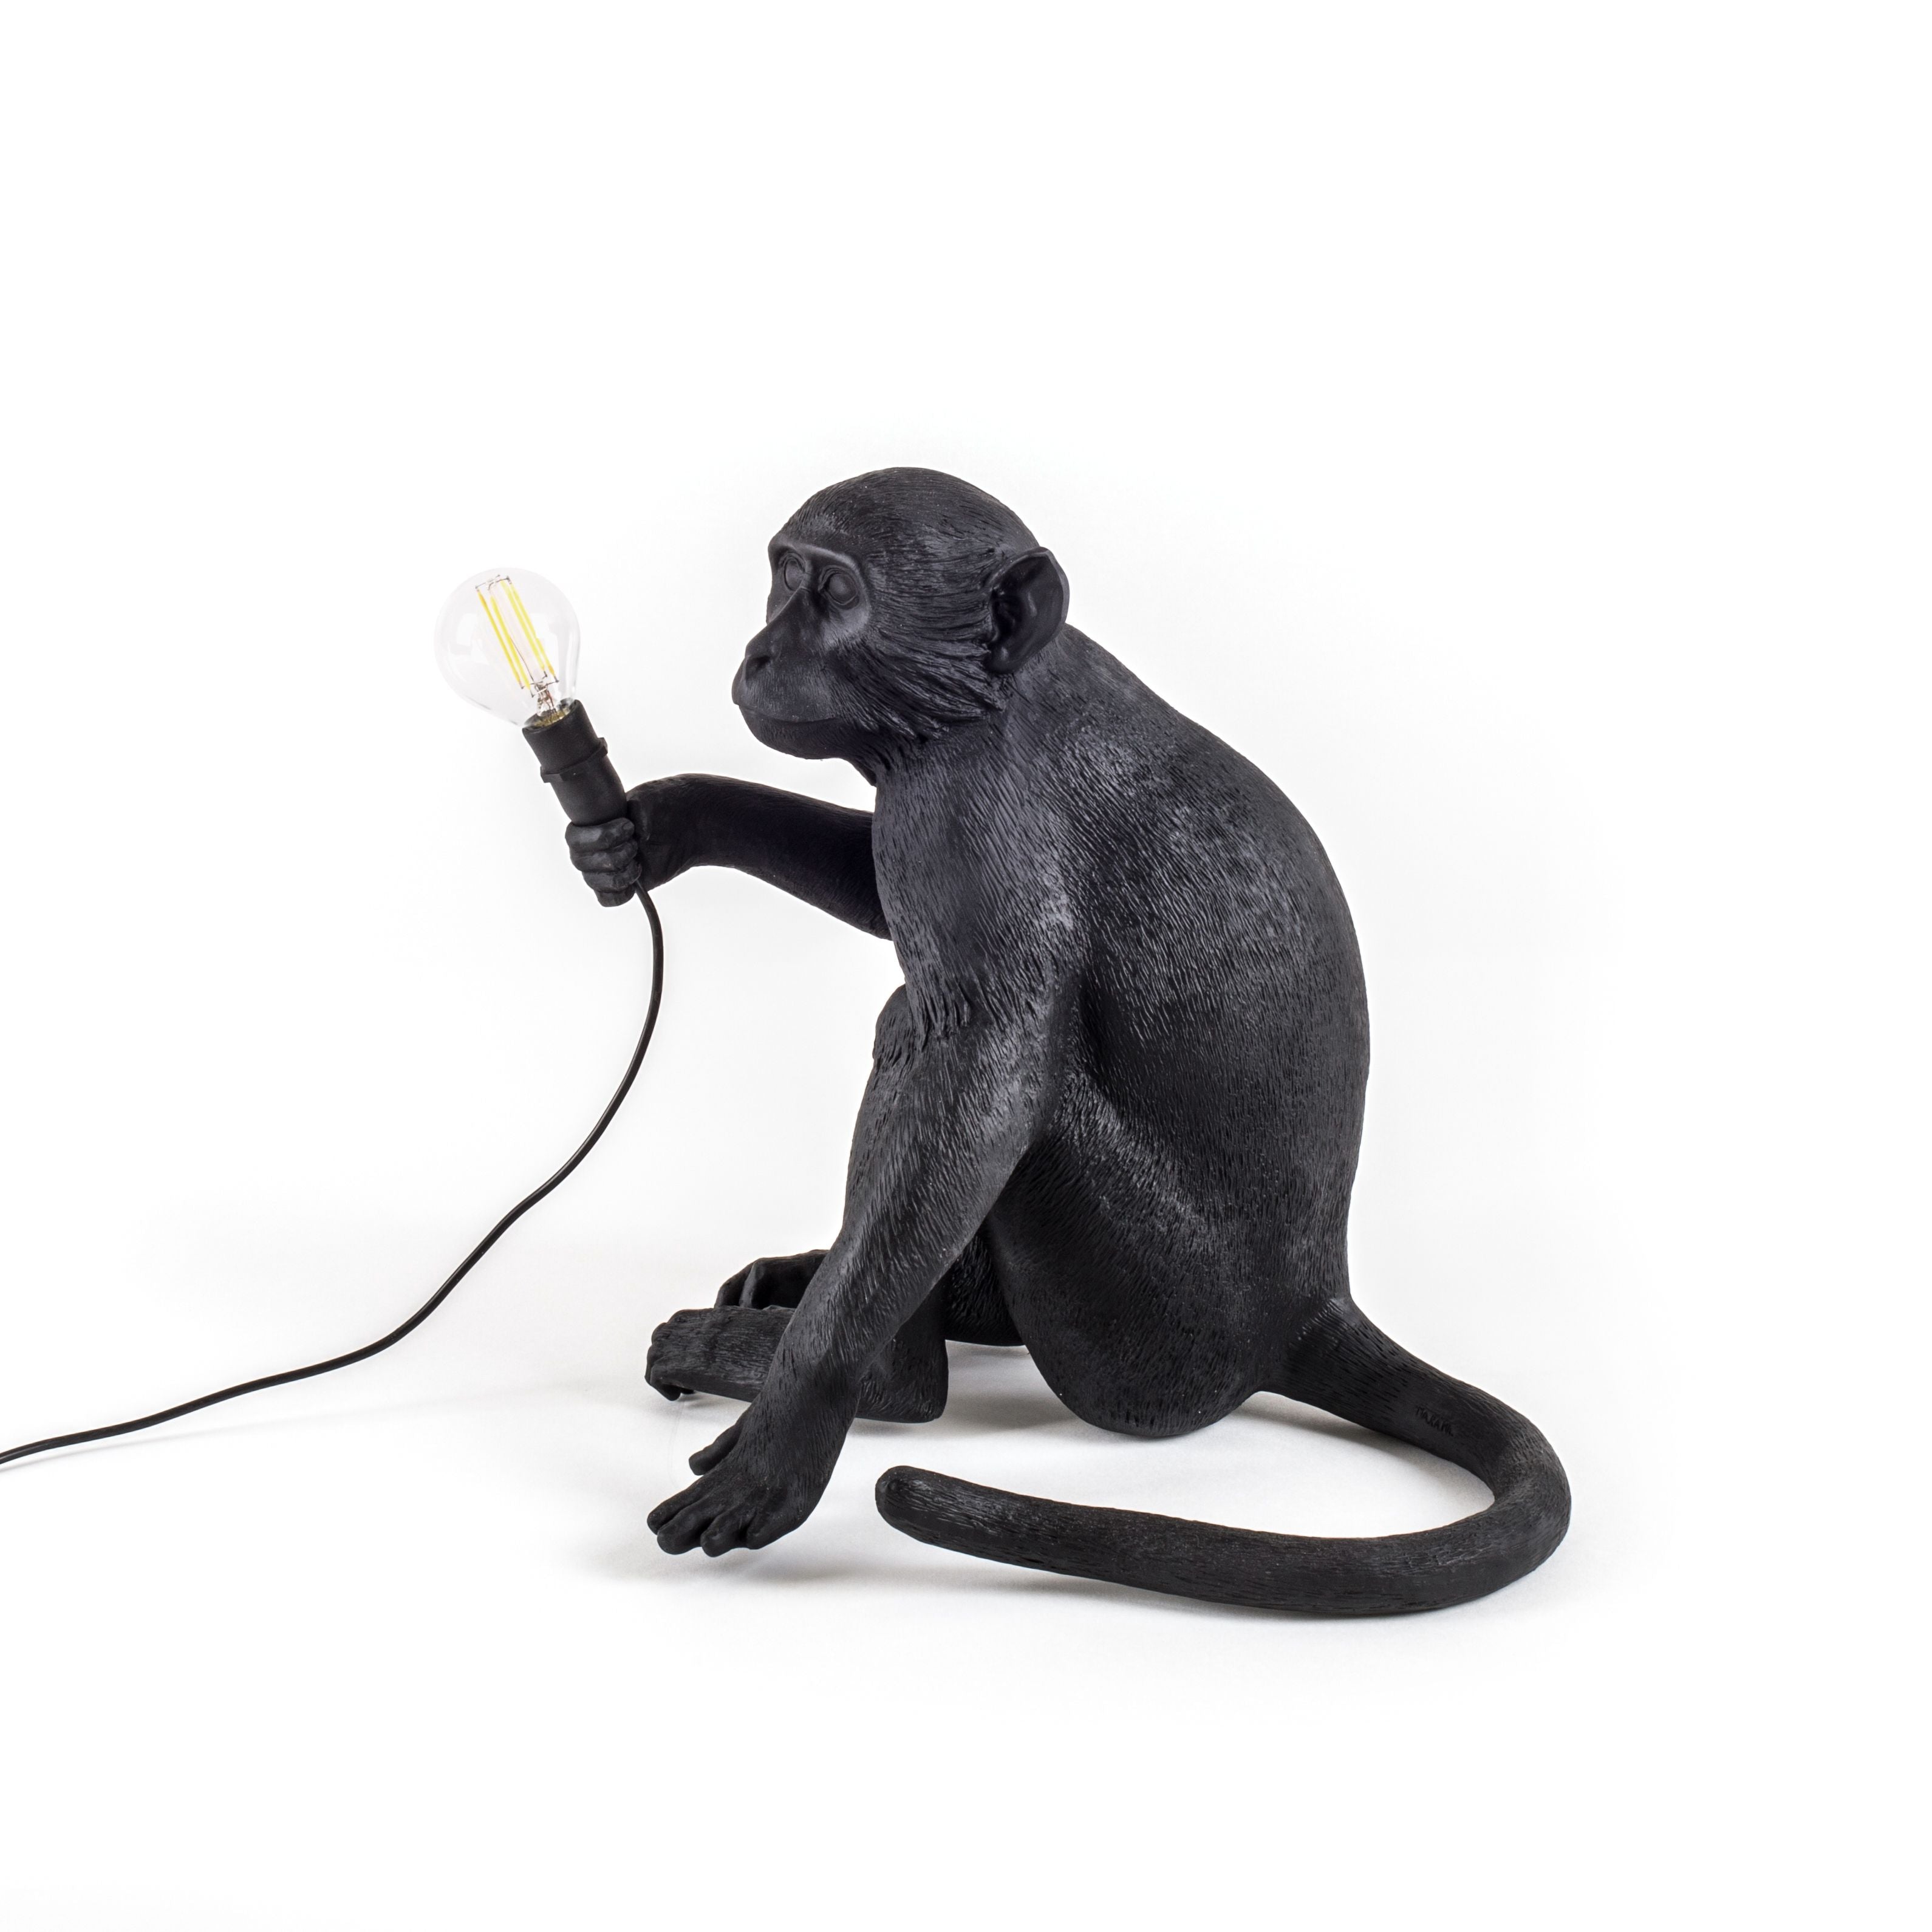 Seletti Monkey Outdoor Lamp černá, sedí